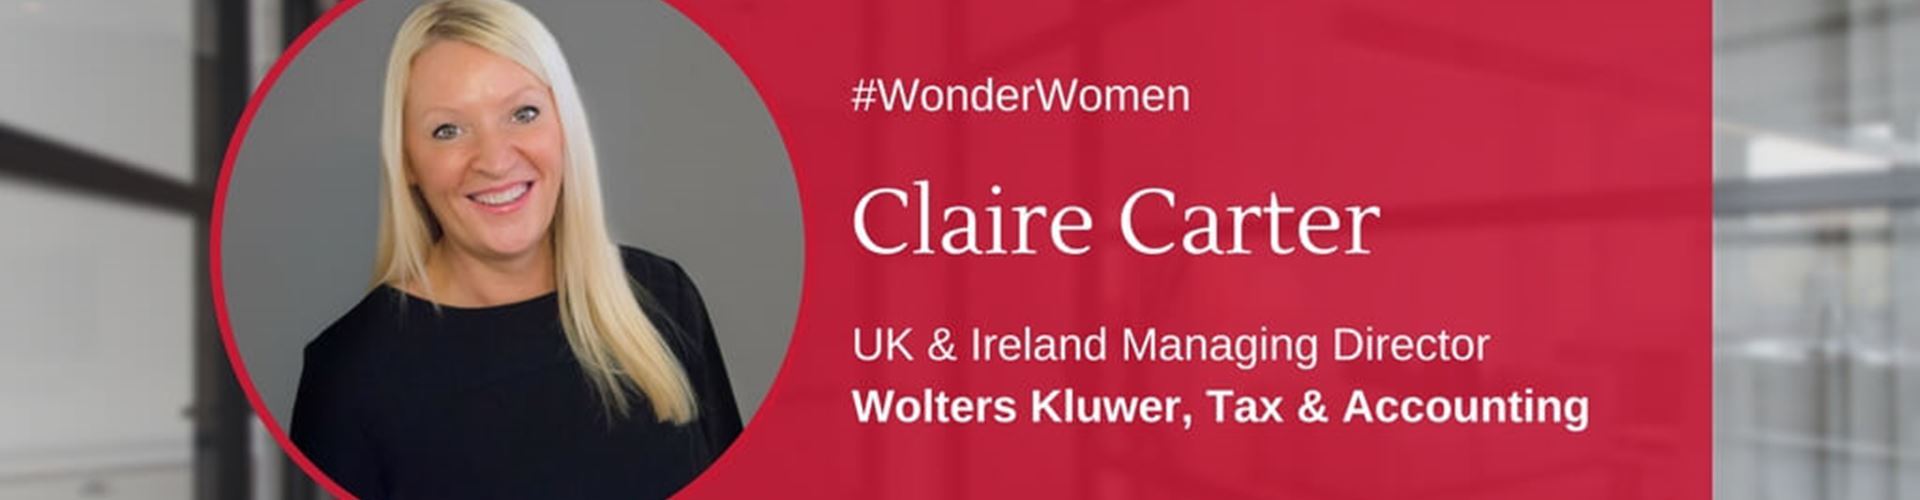 The #WonderWomen Series: Claire Carter